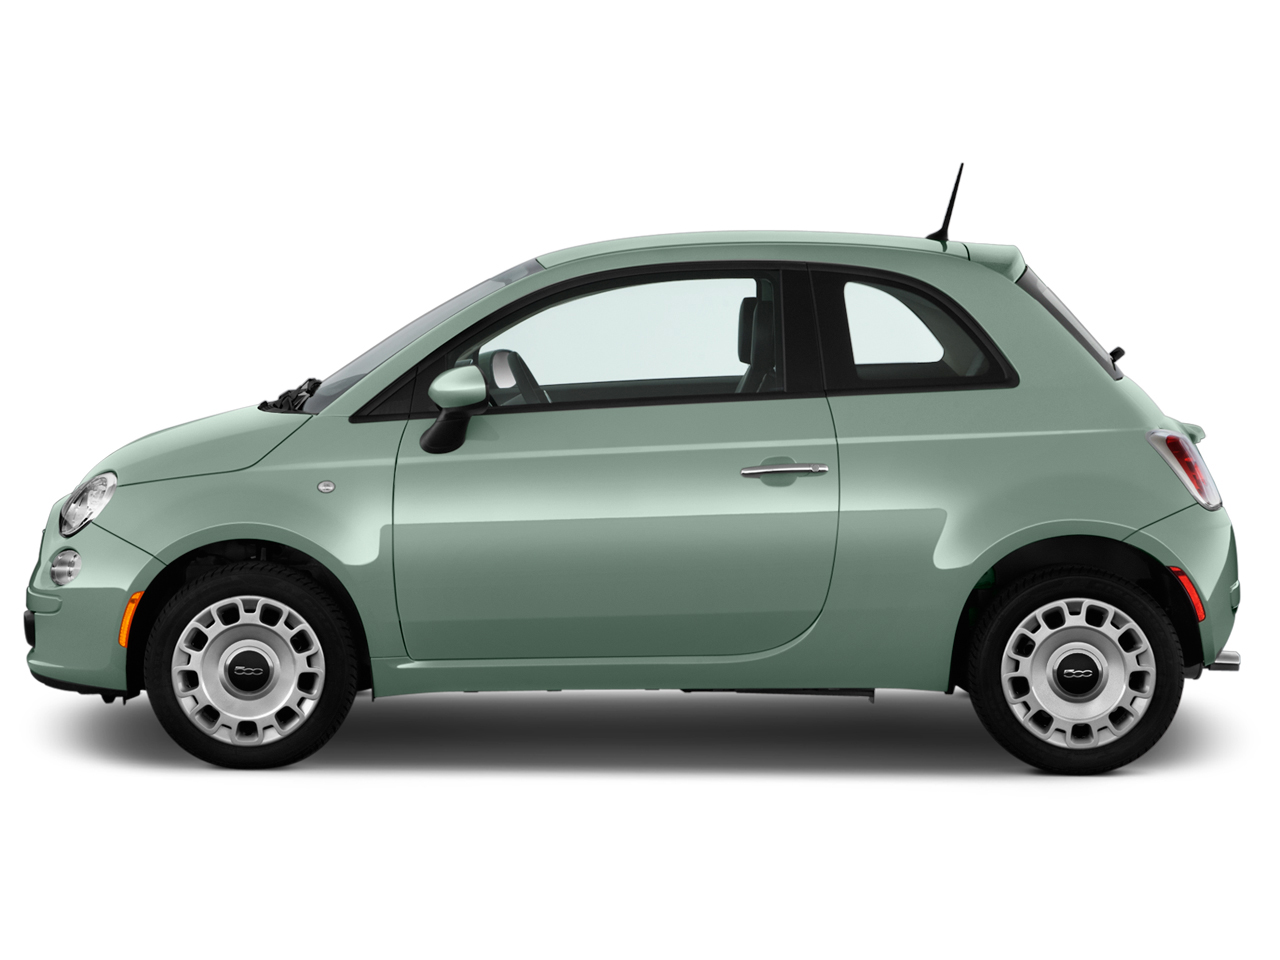 Fiat 500 exterior - Side Profile